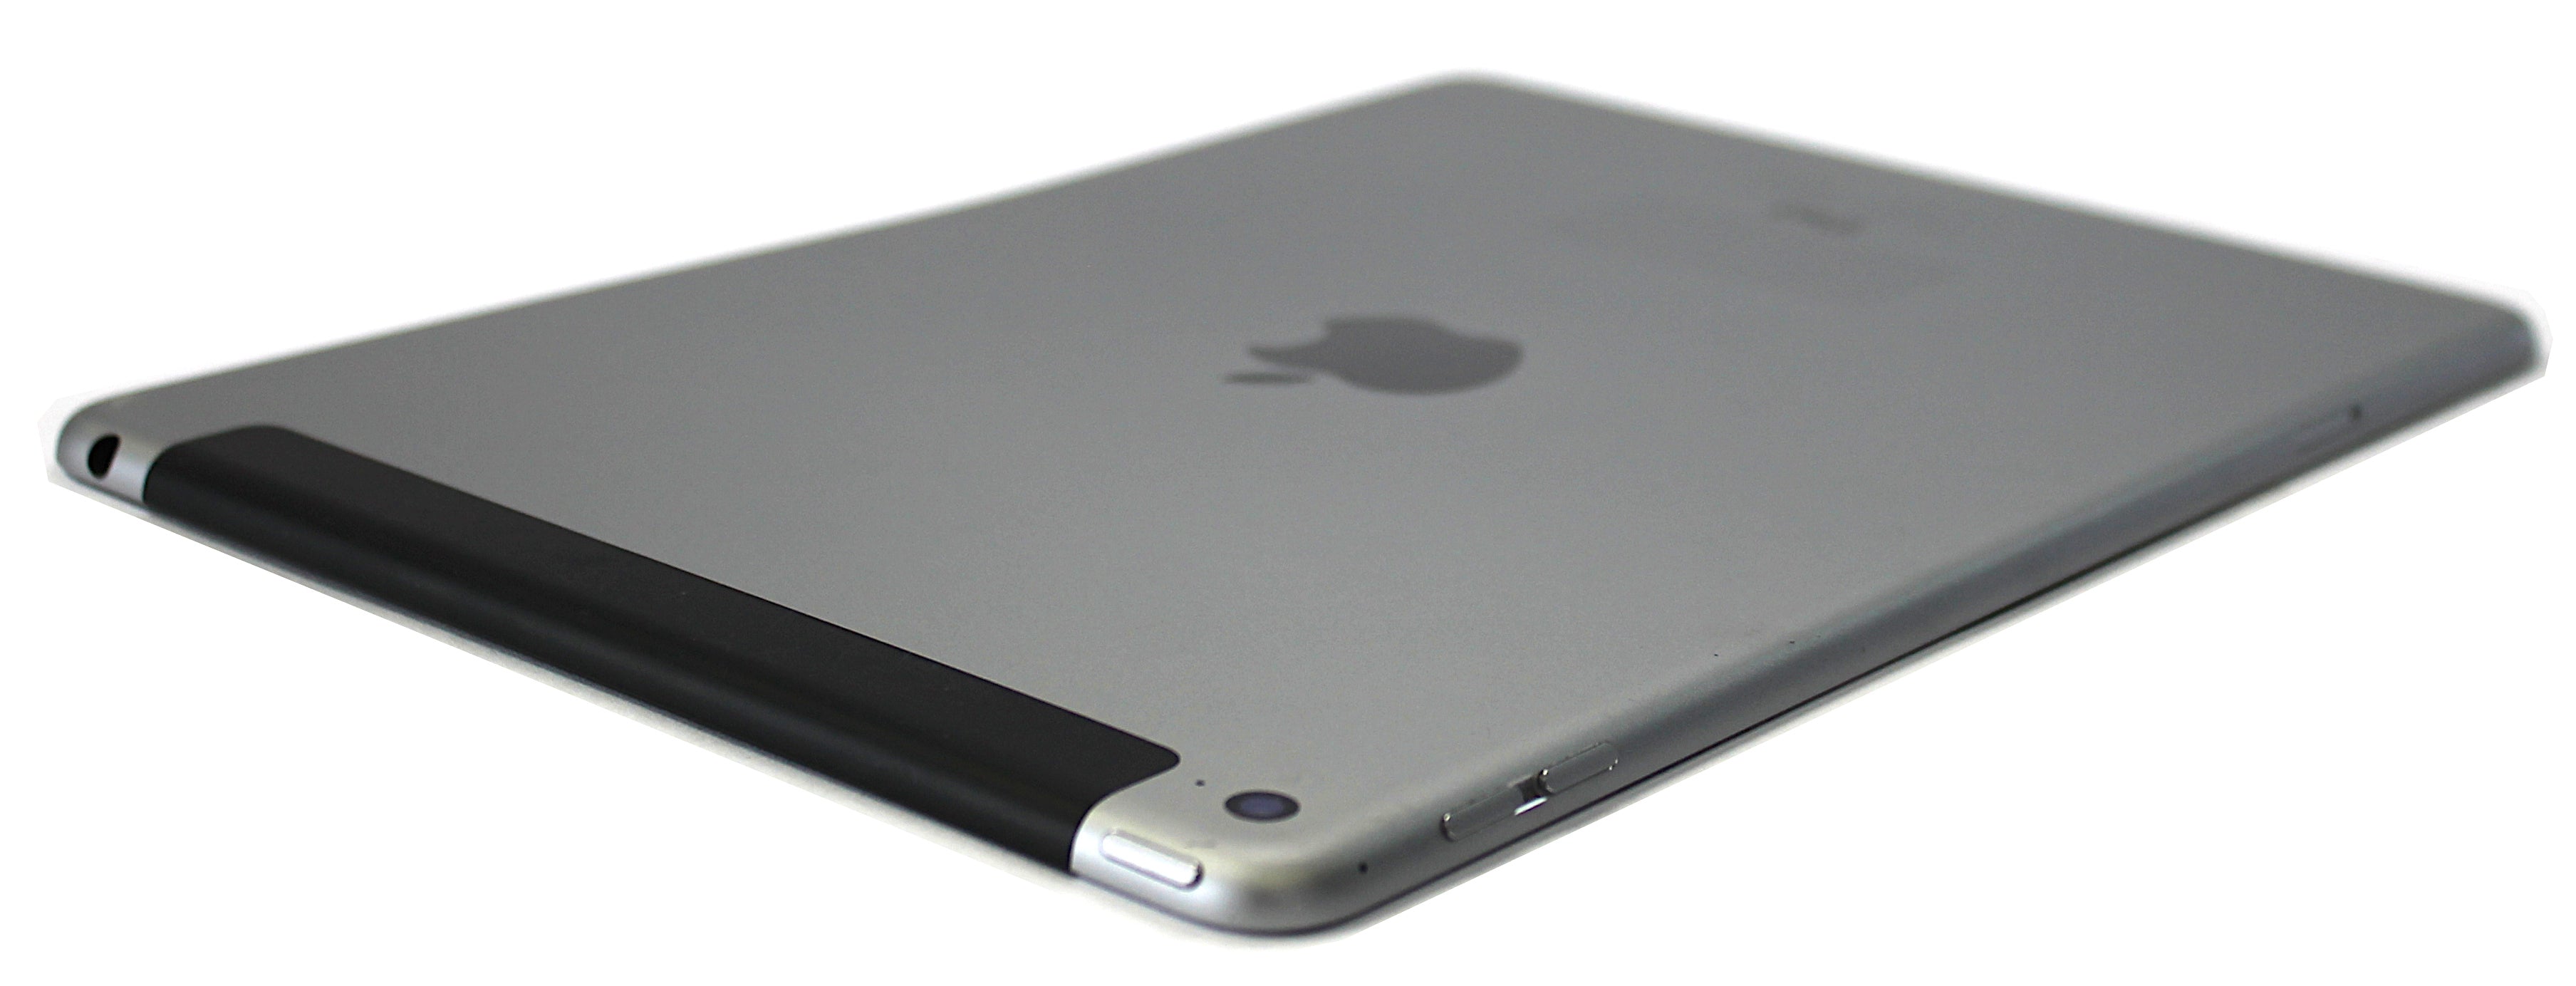 Apple iPad Air 2 Tablet, 16GB, WiFi + GSM, Unlocked, Space Grey, A1567